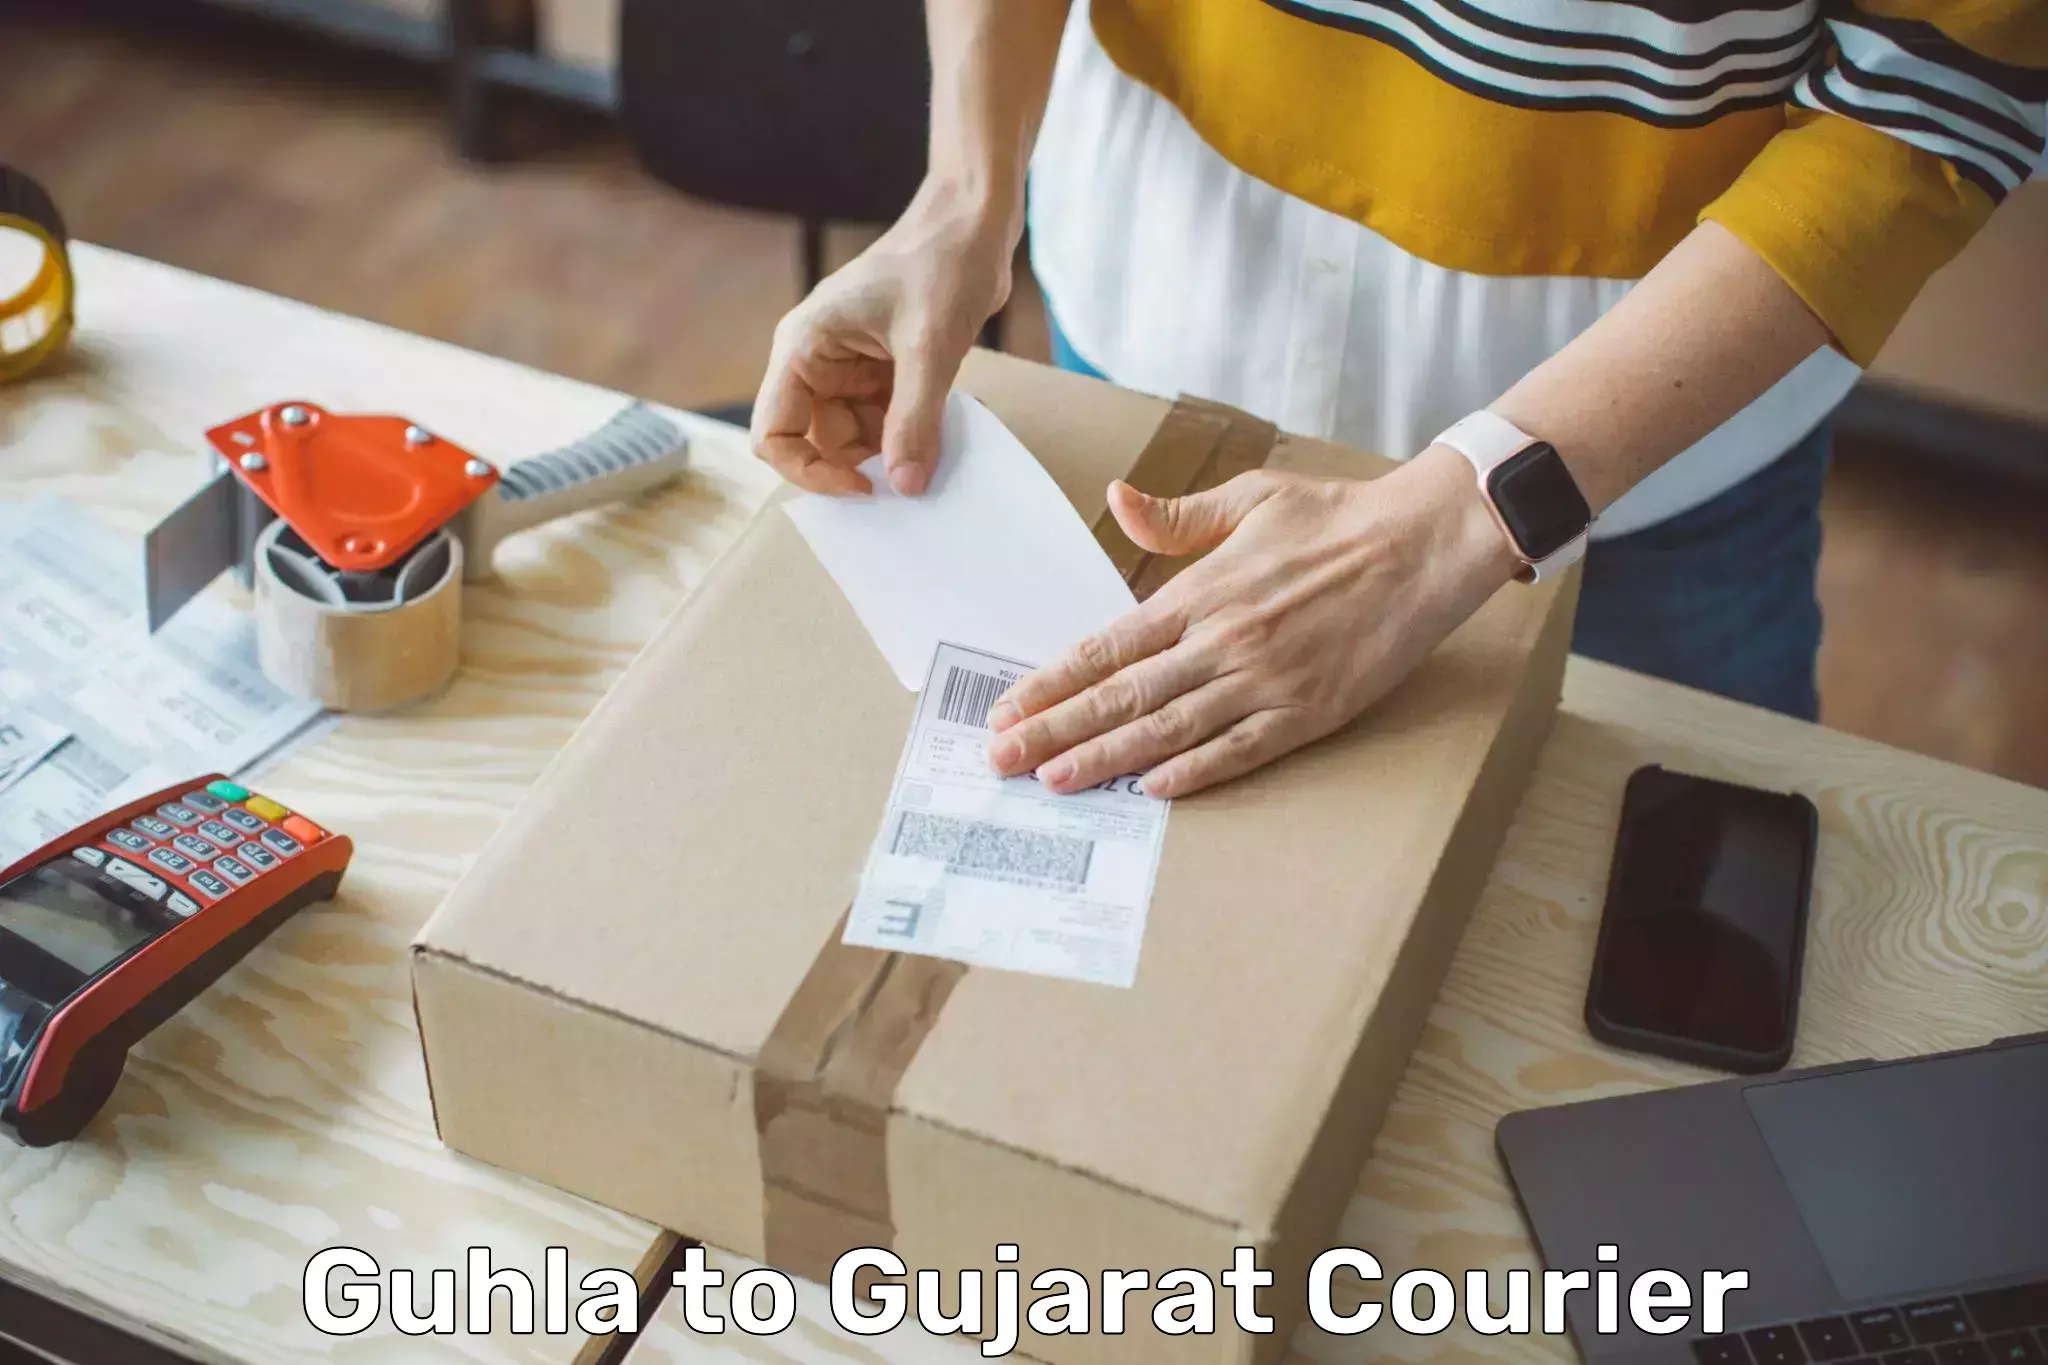 Global logistics network Guhla to Gujarat